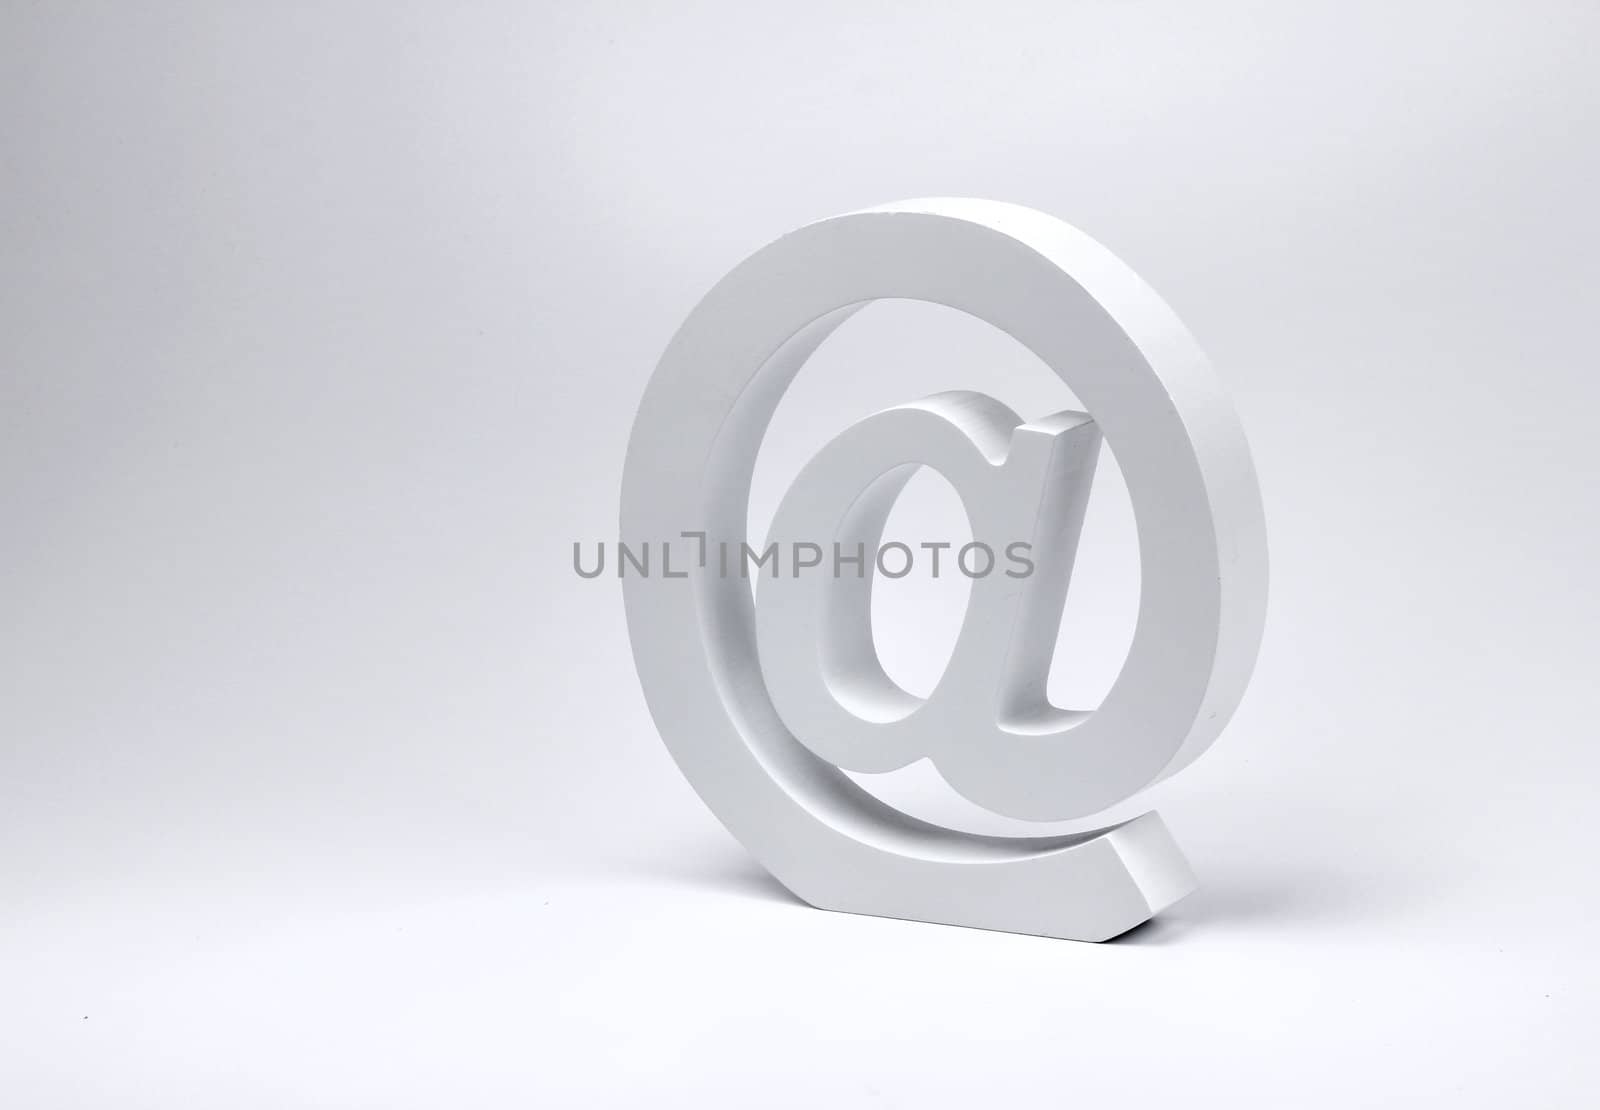 E-mail @ sign block letter symbol by anterovium